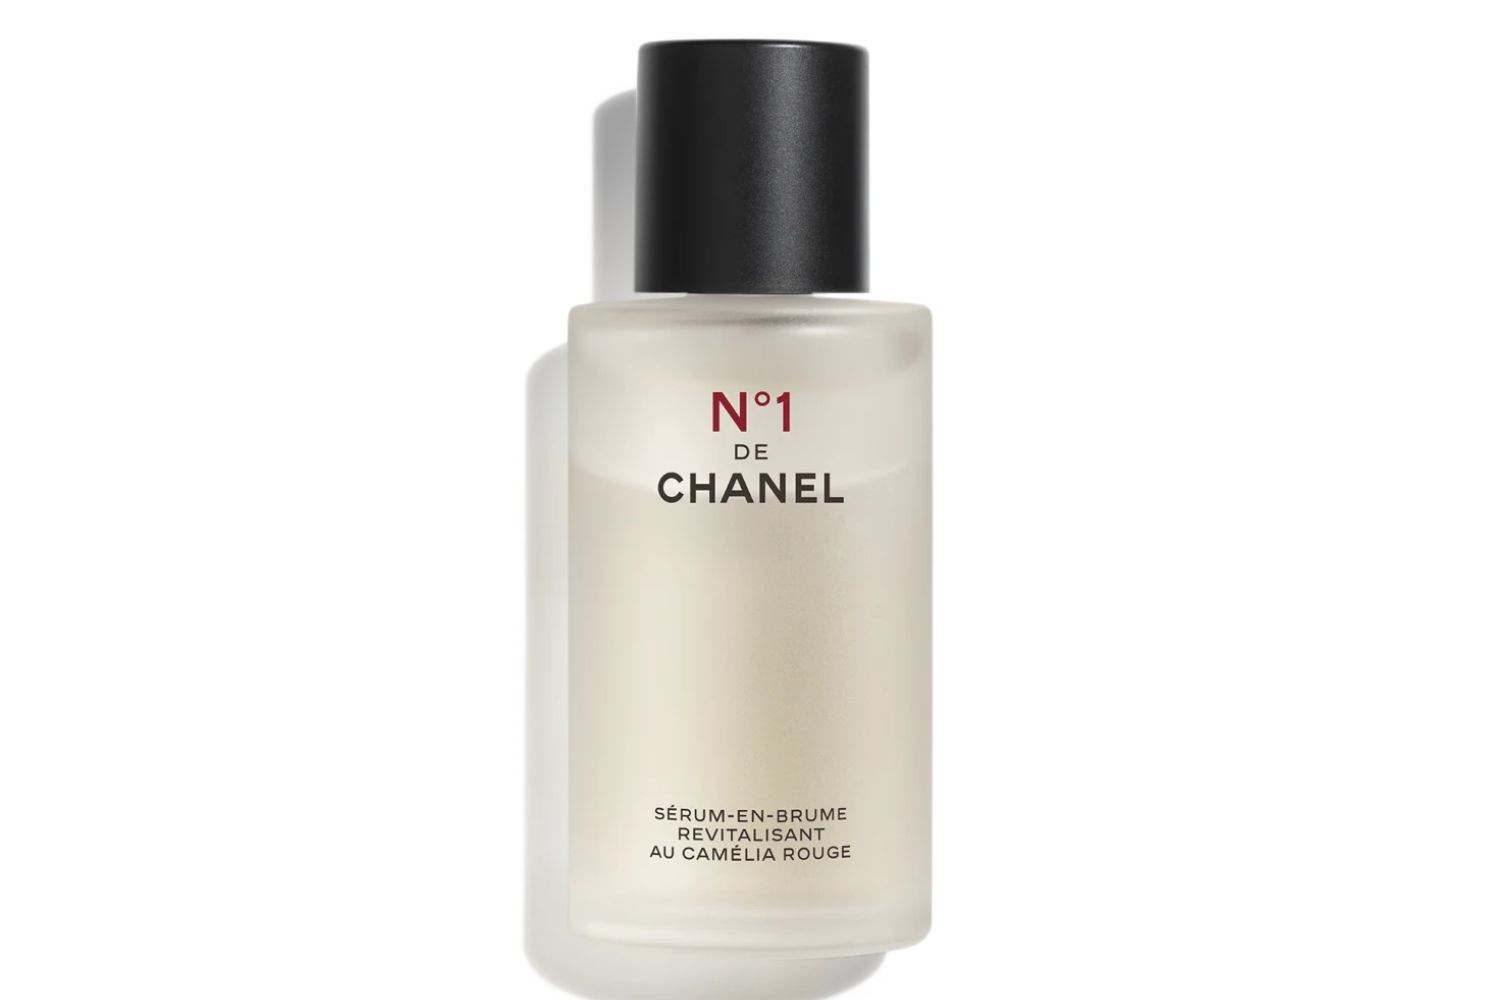 Chanel Revitalizing serum-in-mist